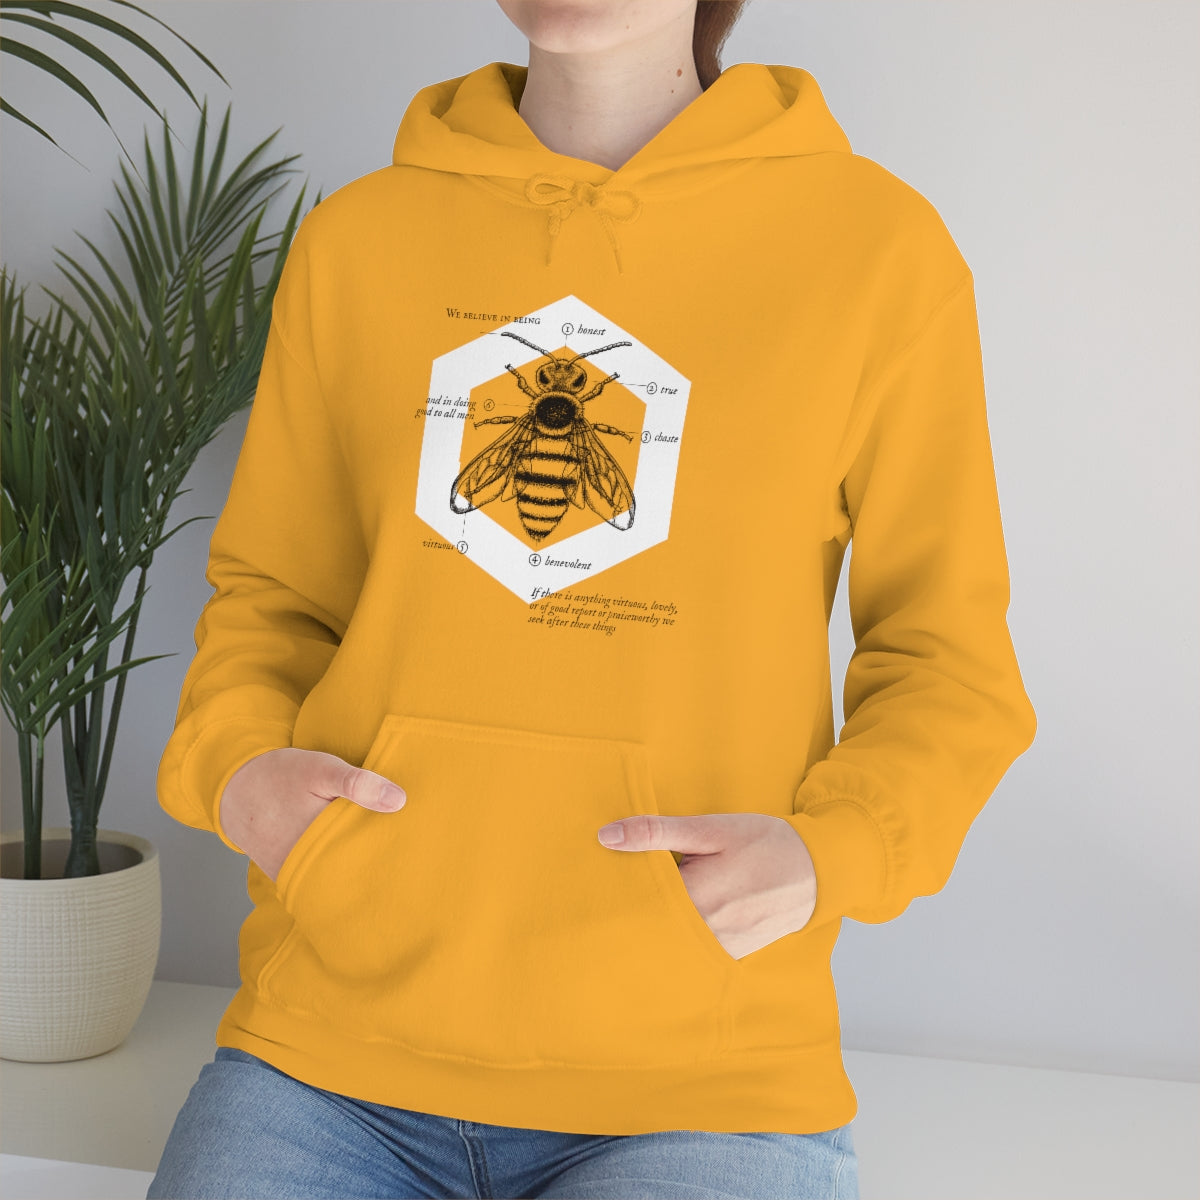 LDS Honey Bee Hoodie - We Believe, Articles of Faith Hooded Sweatshirt